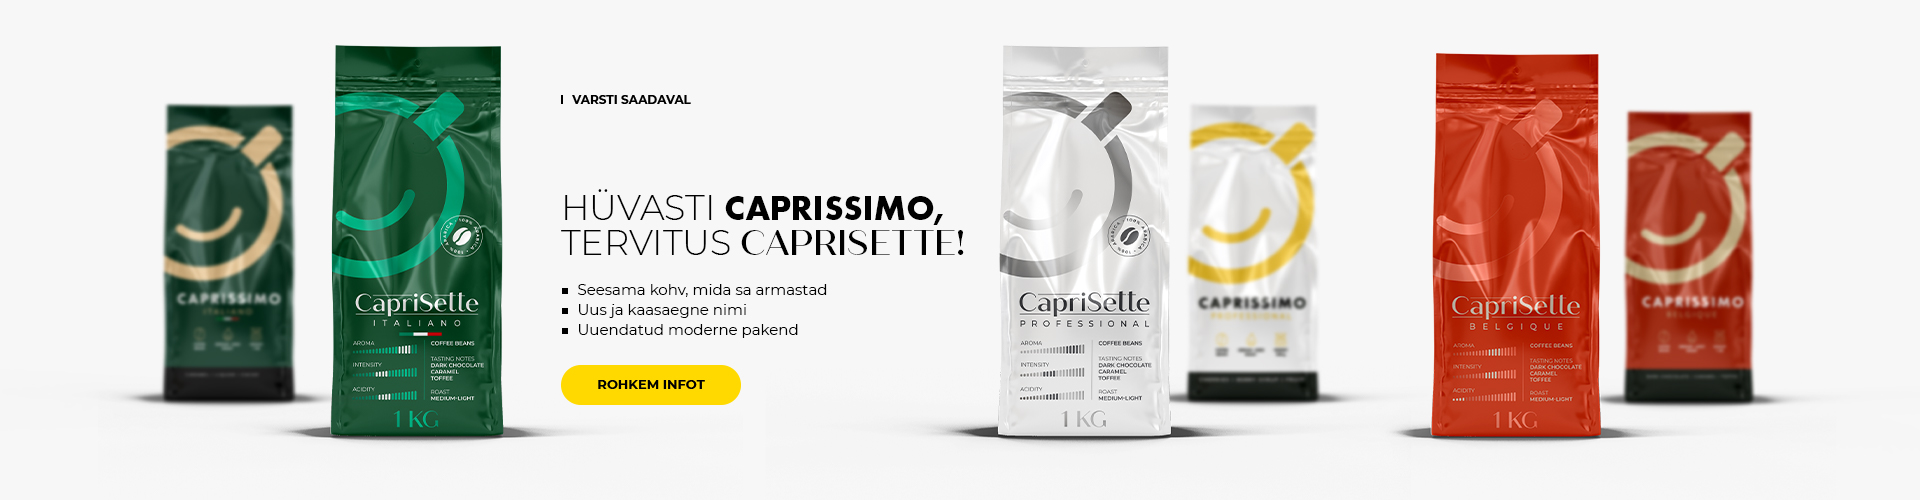 Tere Caprisette